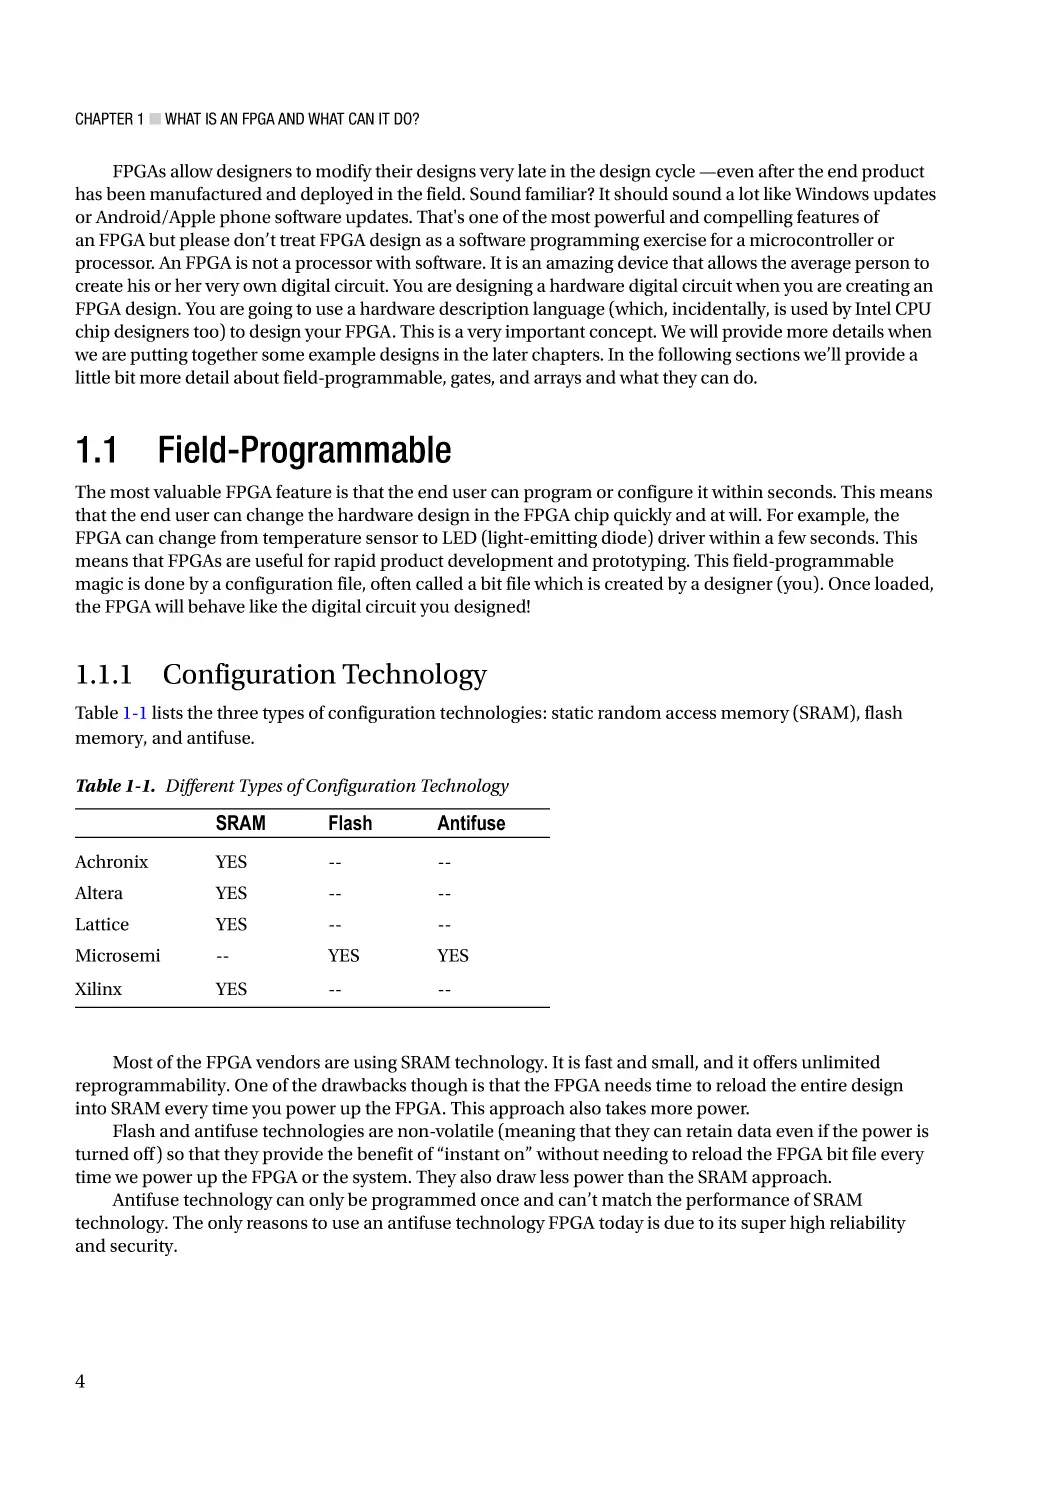 1.1 Field-Programmable
1.1.1 Configuration Technology